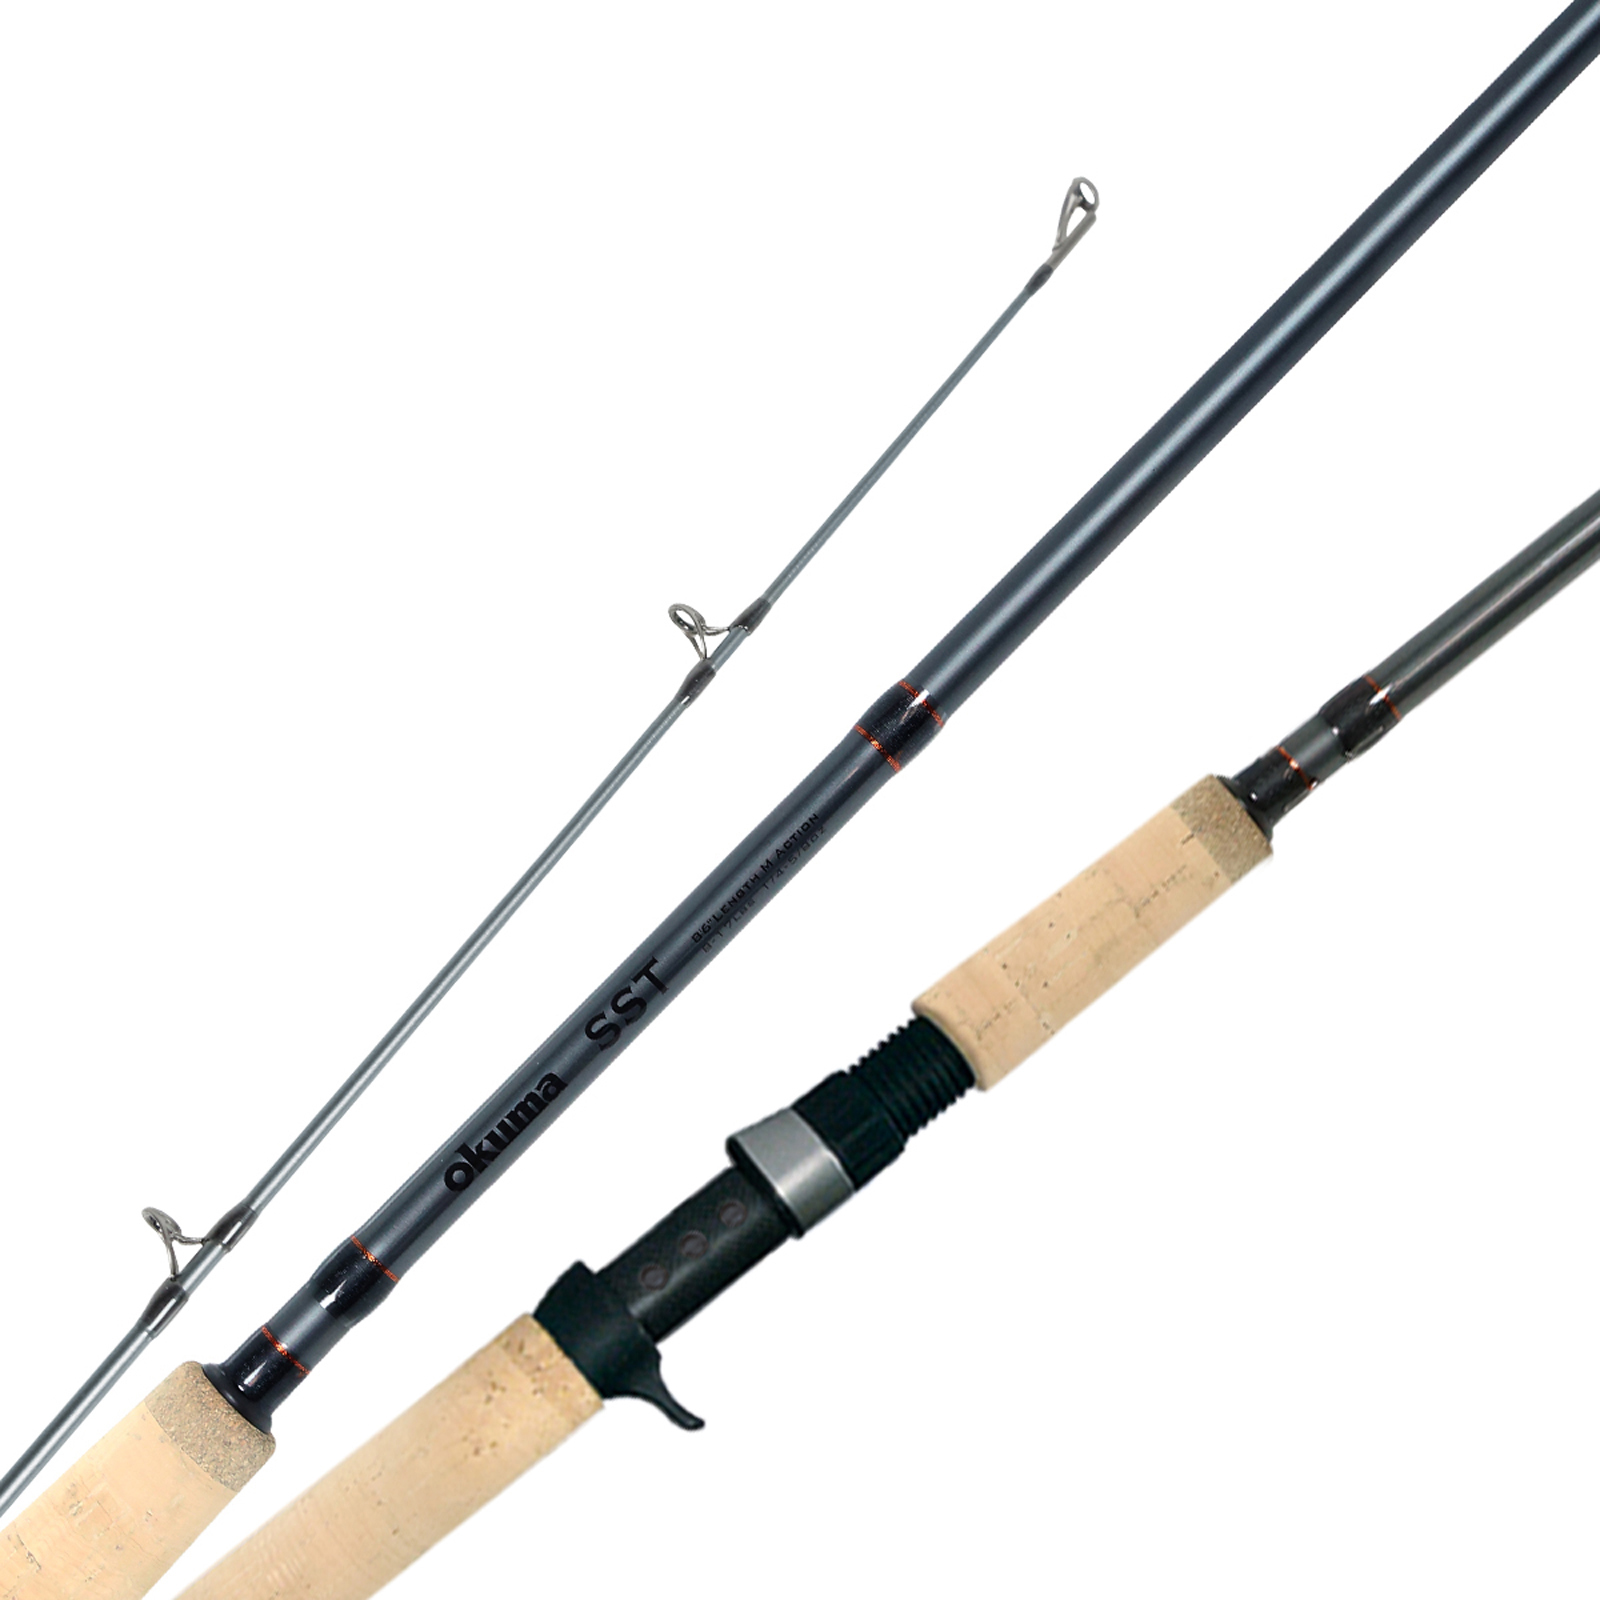 Okuma SST A Series Medium-Heavy Casting Rod with Cork Grip, 10